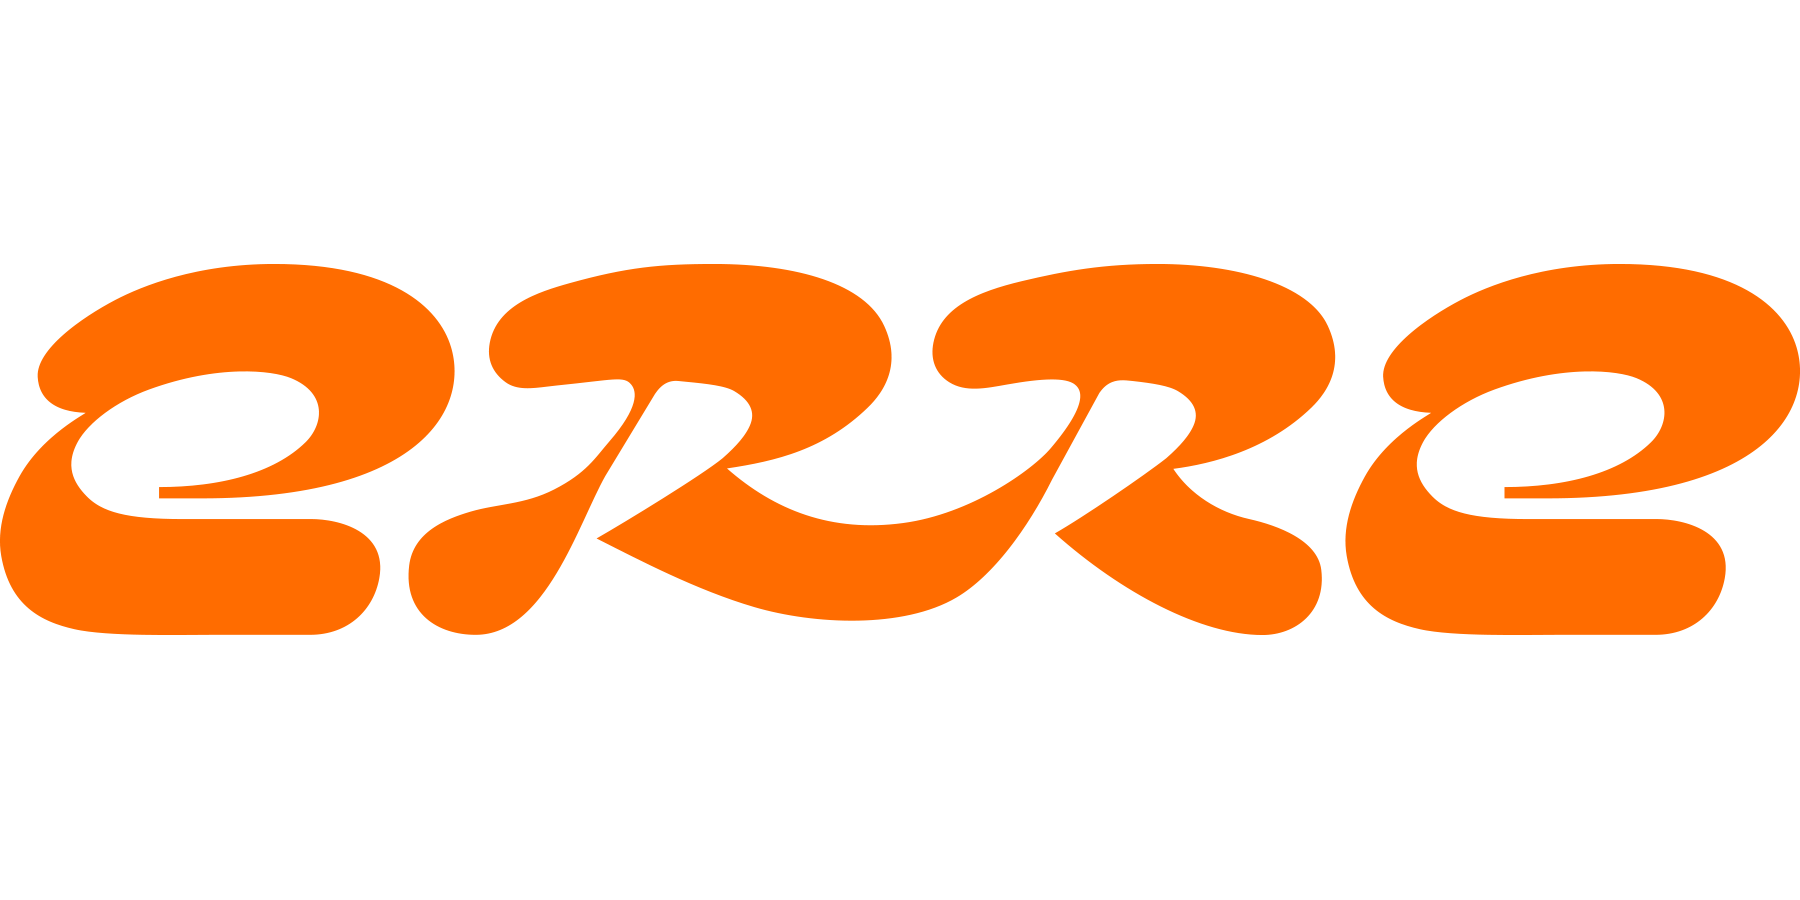 erre_logo_orange.png